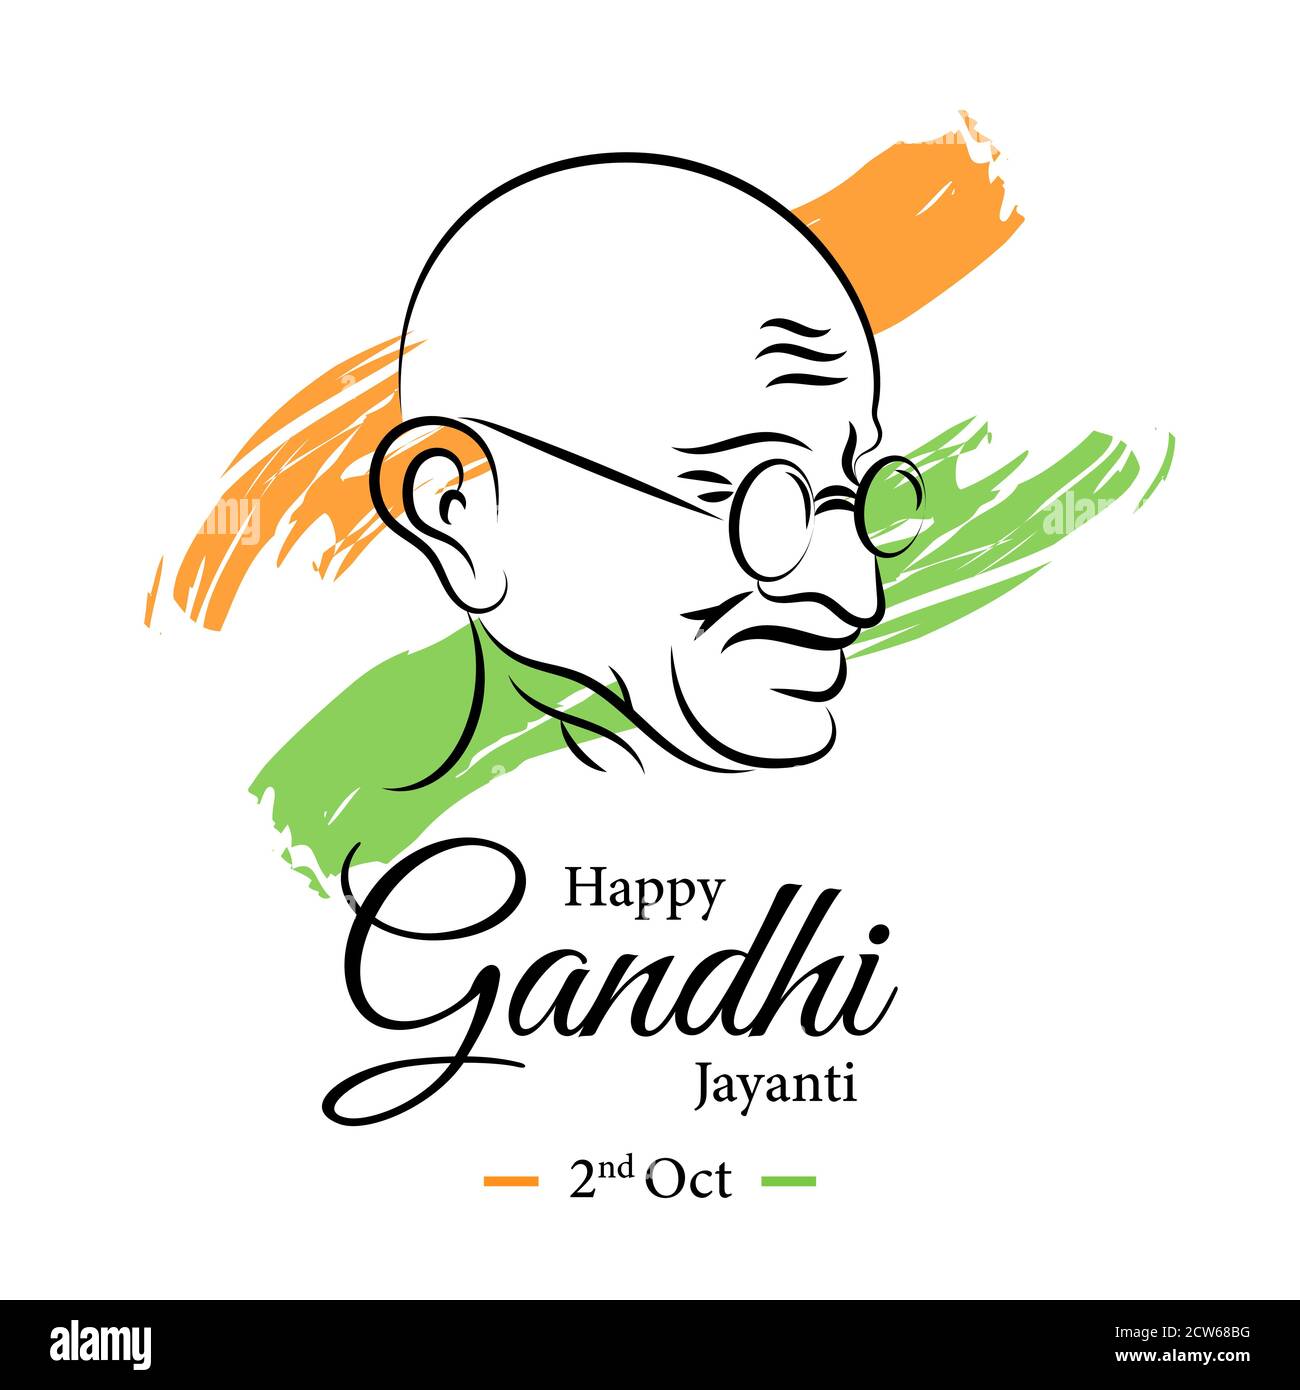 Happy Gandhi Jayanti, 2nd Oct, Mahatma Gandhi poster, vector illustration Stock Vector